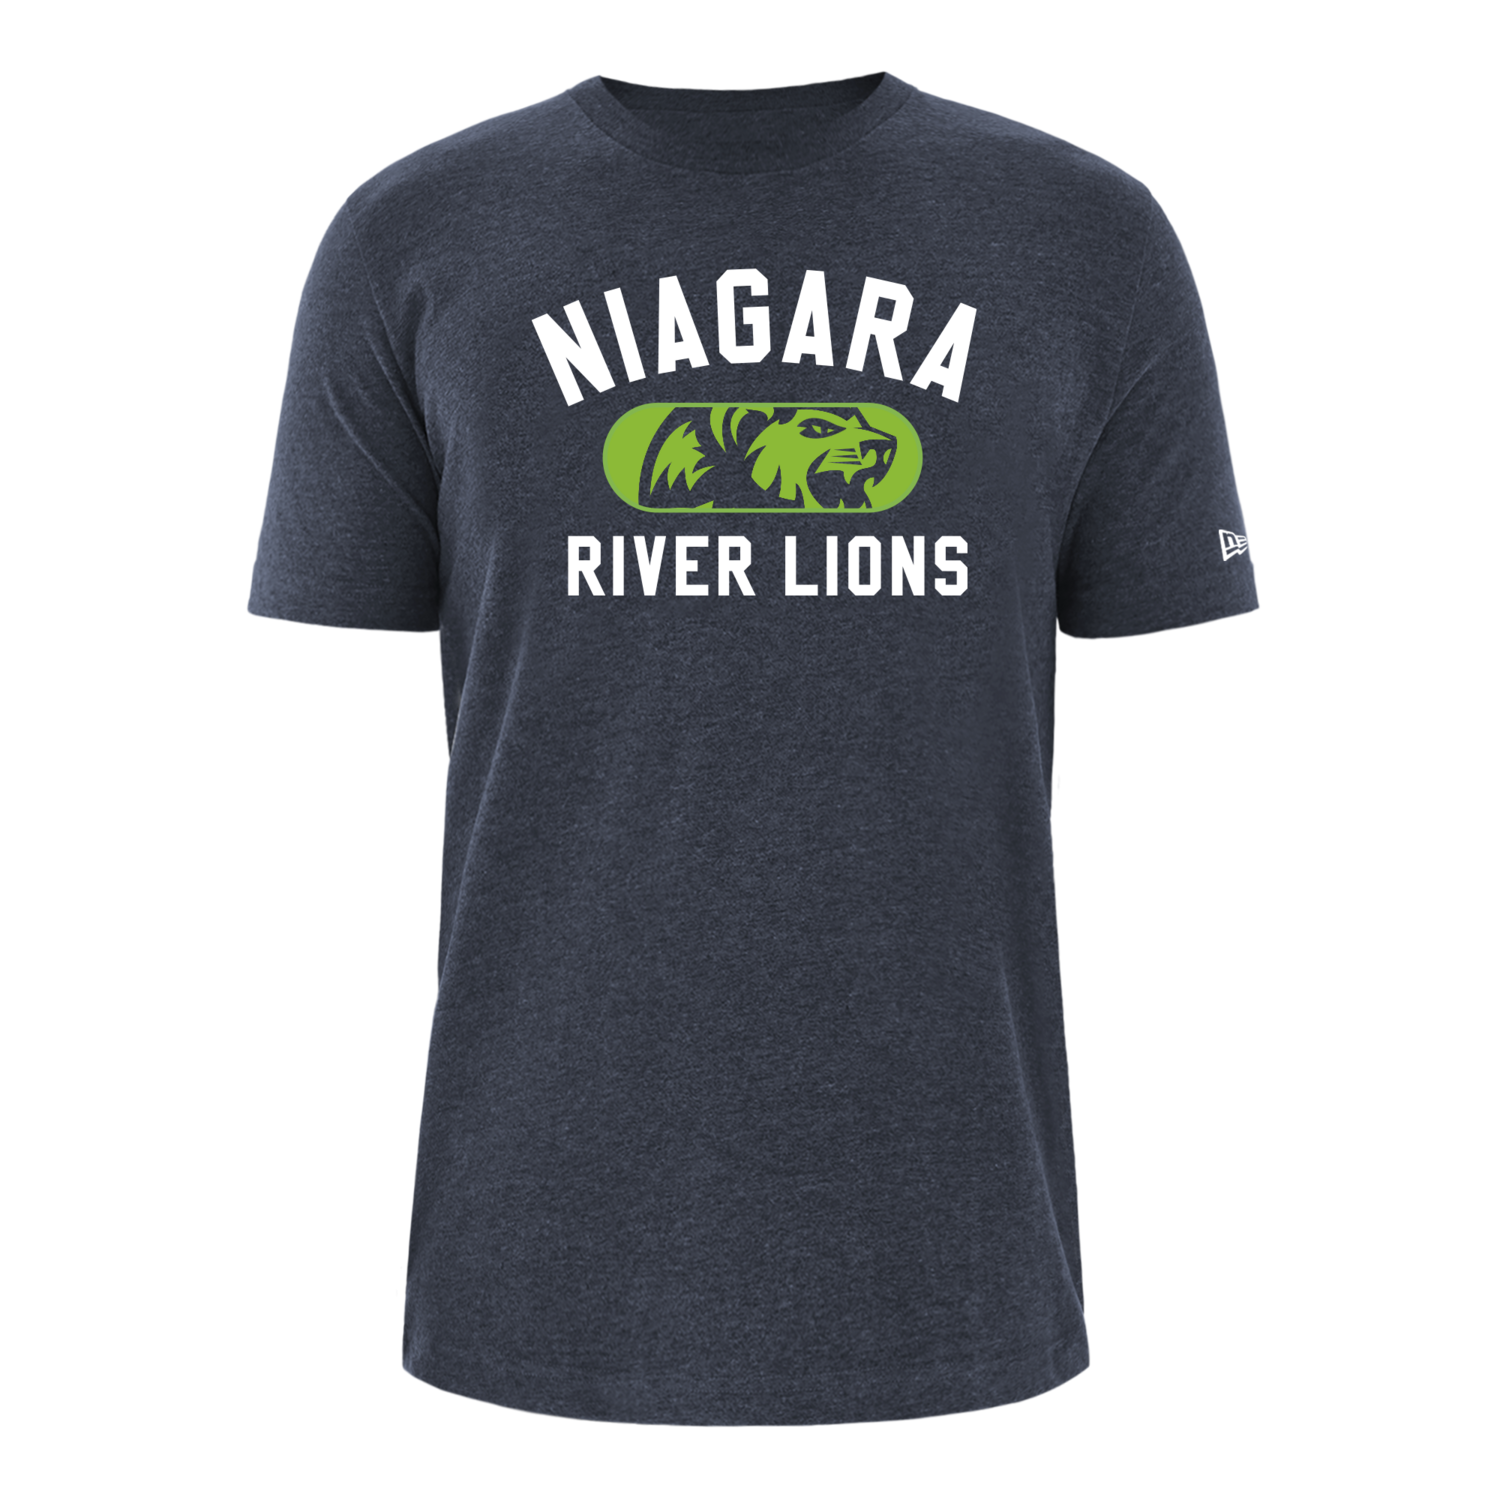 Niagara River Lions Adult Team Tee